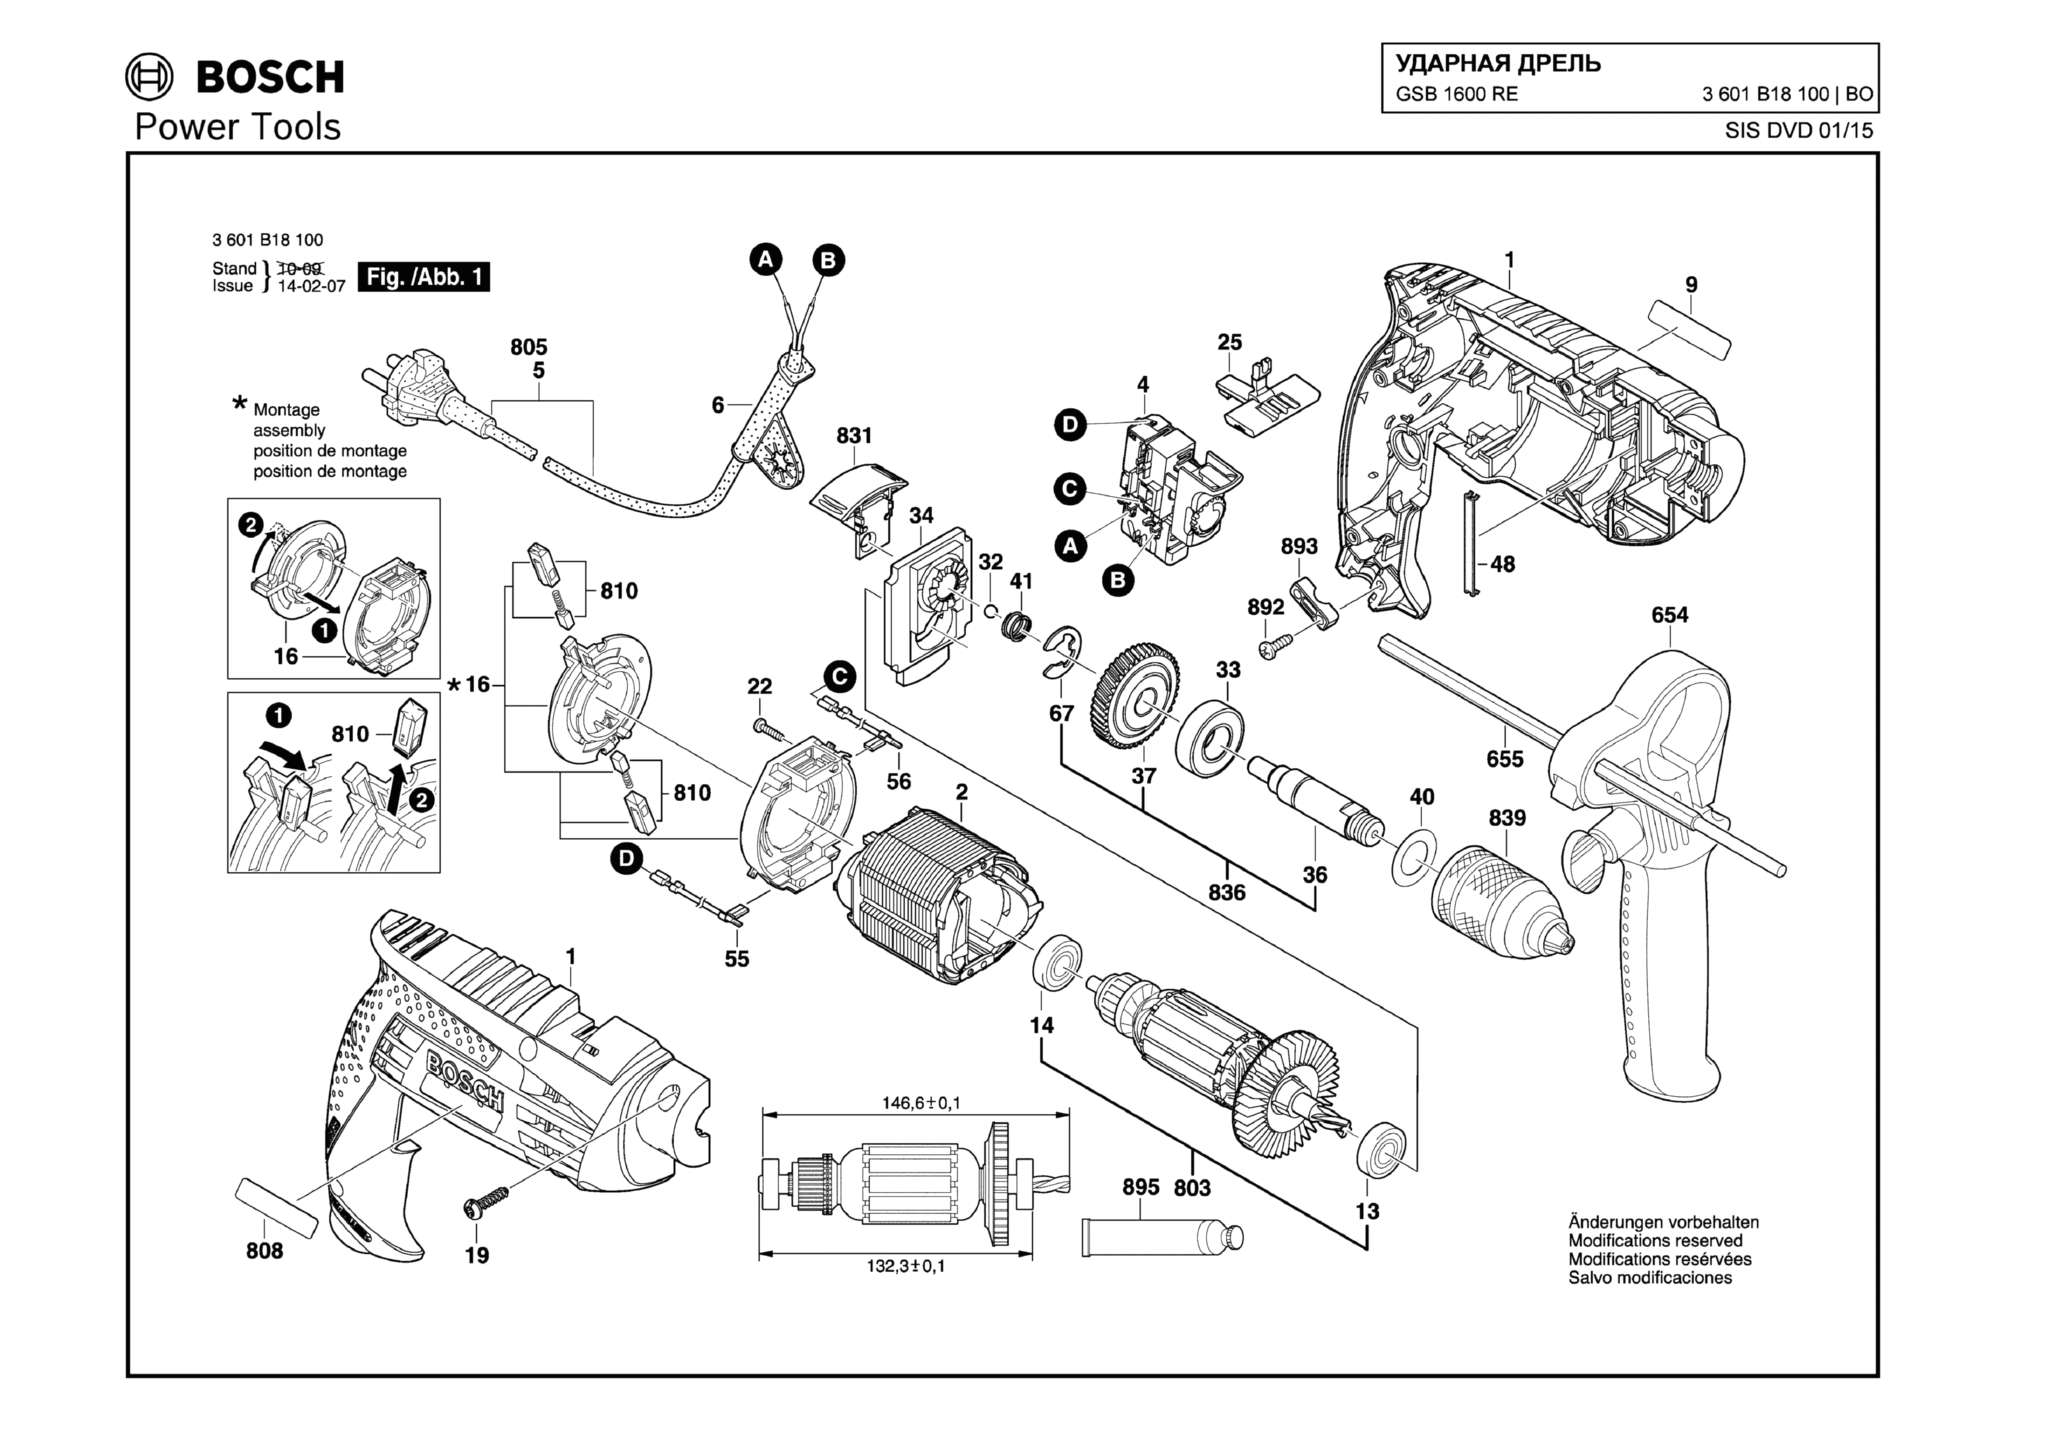 Запчасти, схема и деталировка Bosch GSB 1600 RE (ТИП 3601B18100)